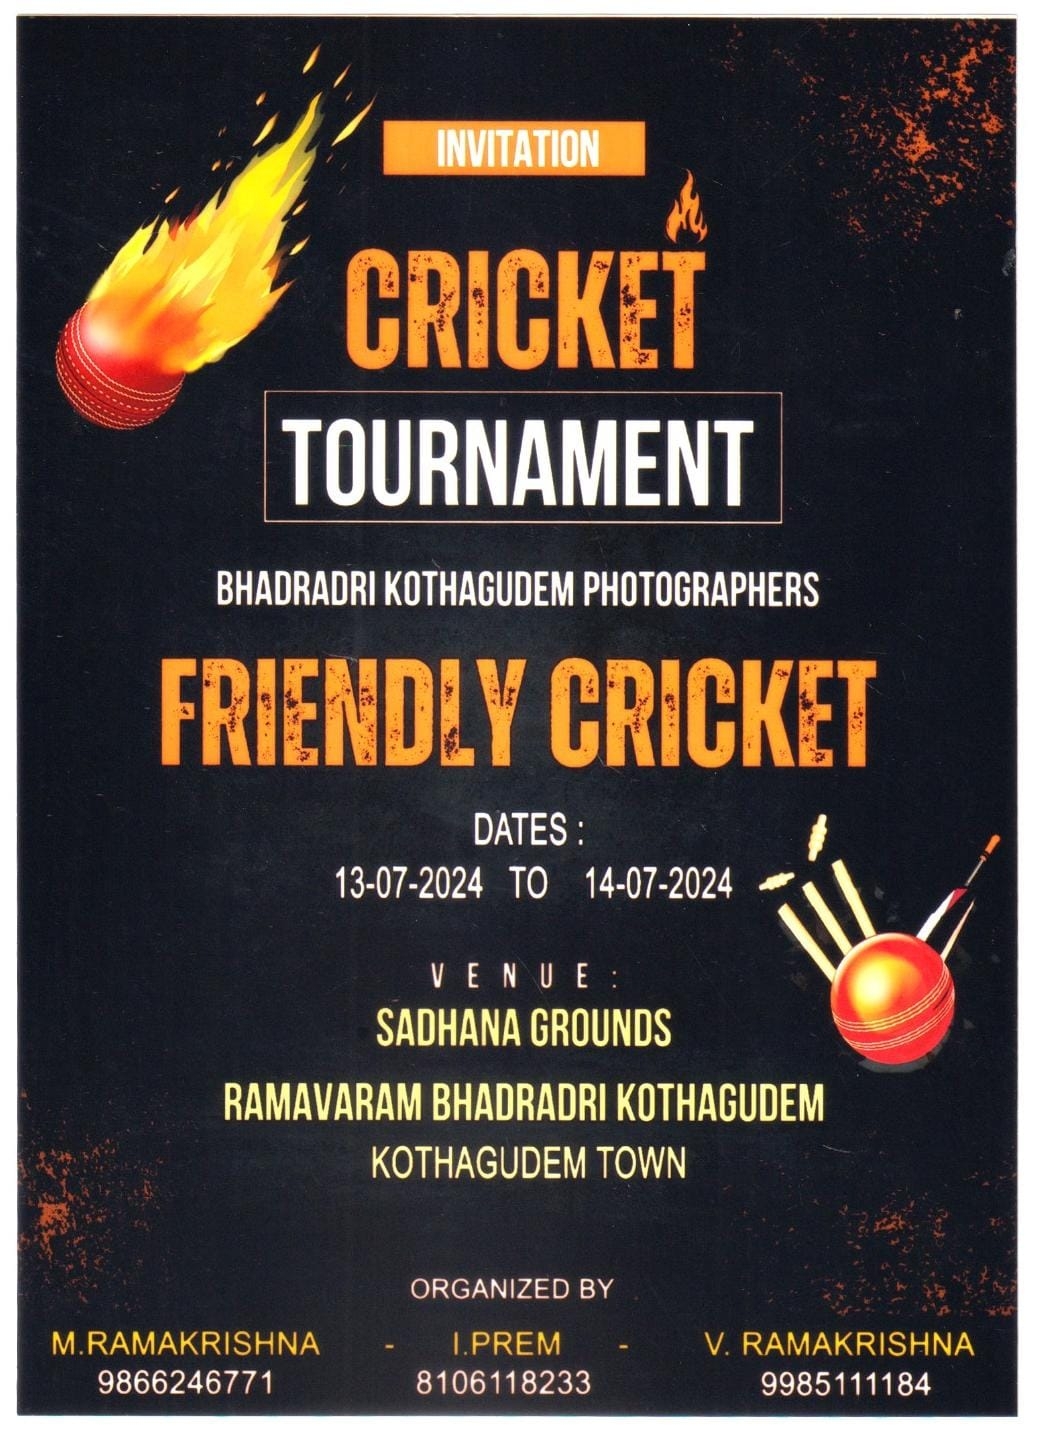 Photographers Friendly Cricket Tournament Kothagudem 